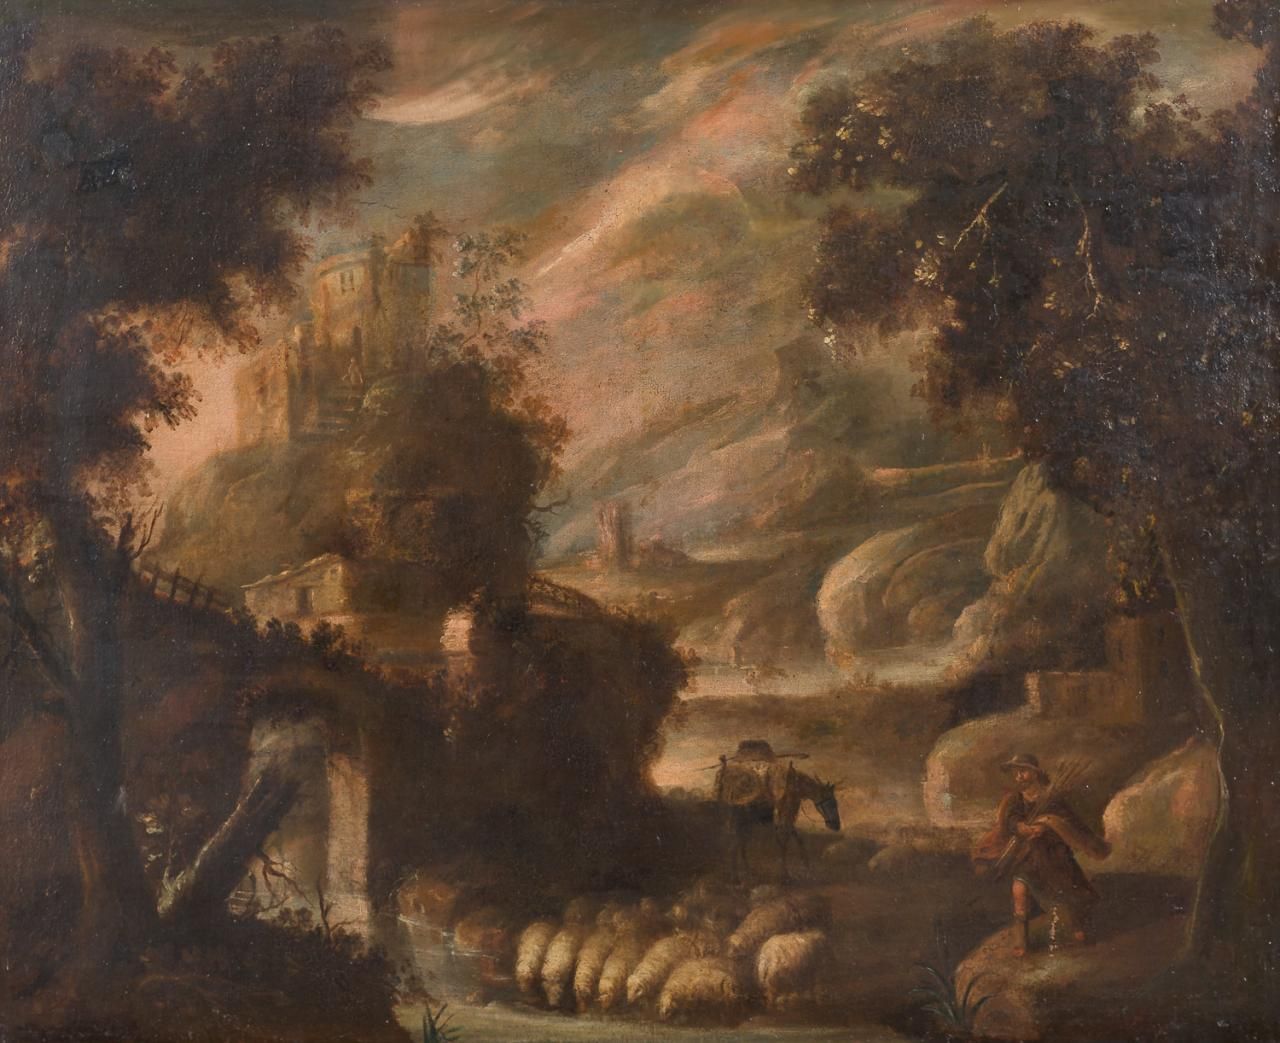 IGNACIO DE IRIARTE (Azcoitia, 1621 - Sevilla, 1670) Escena de pastoreo
Óleo sobr&hellip;